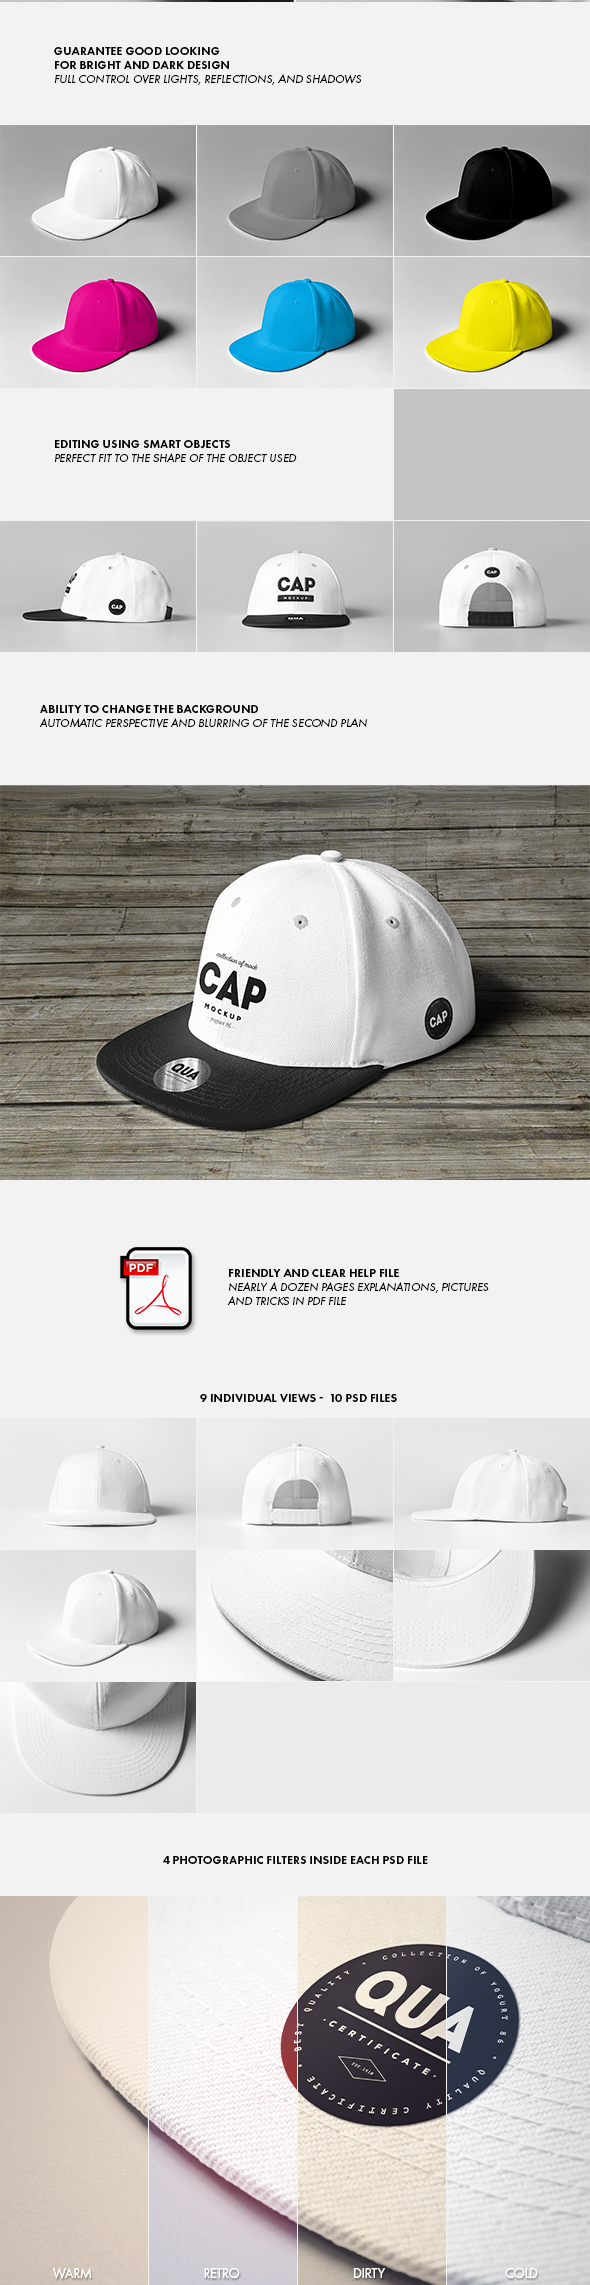 baseball clasp clip Embroidery fullcap hat Hats hood Mockup new era printed